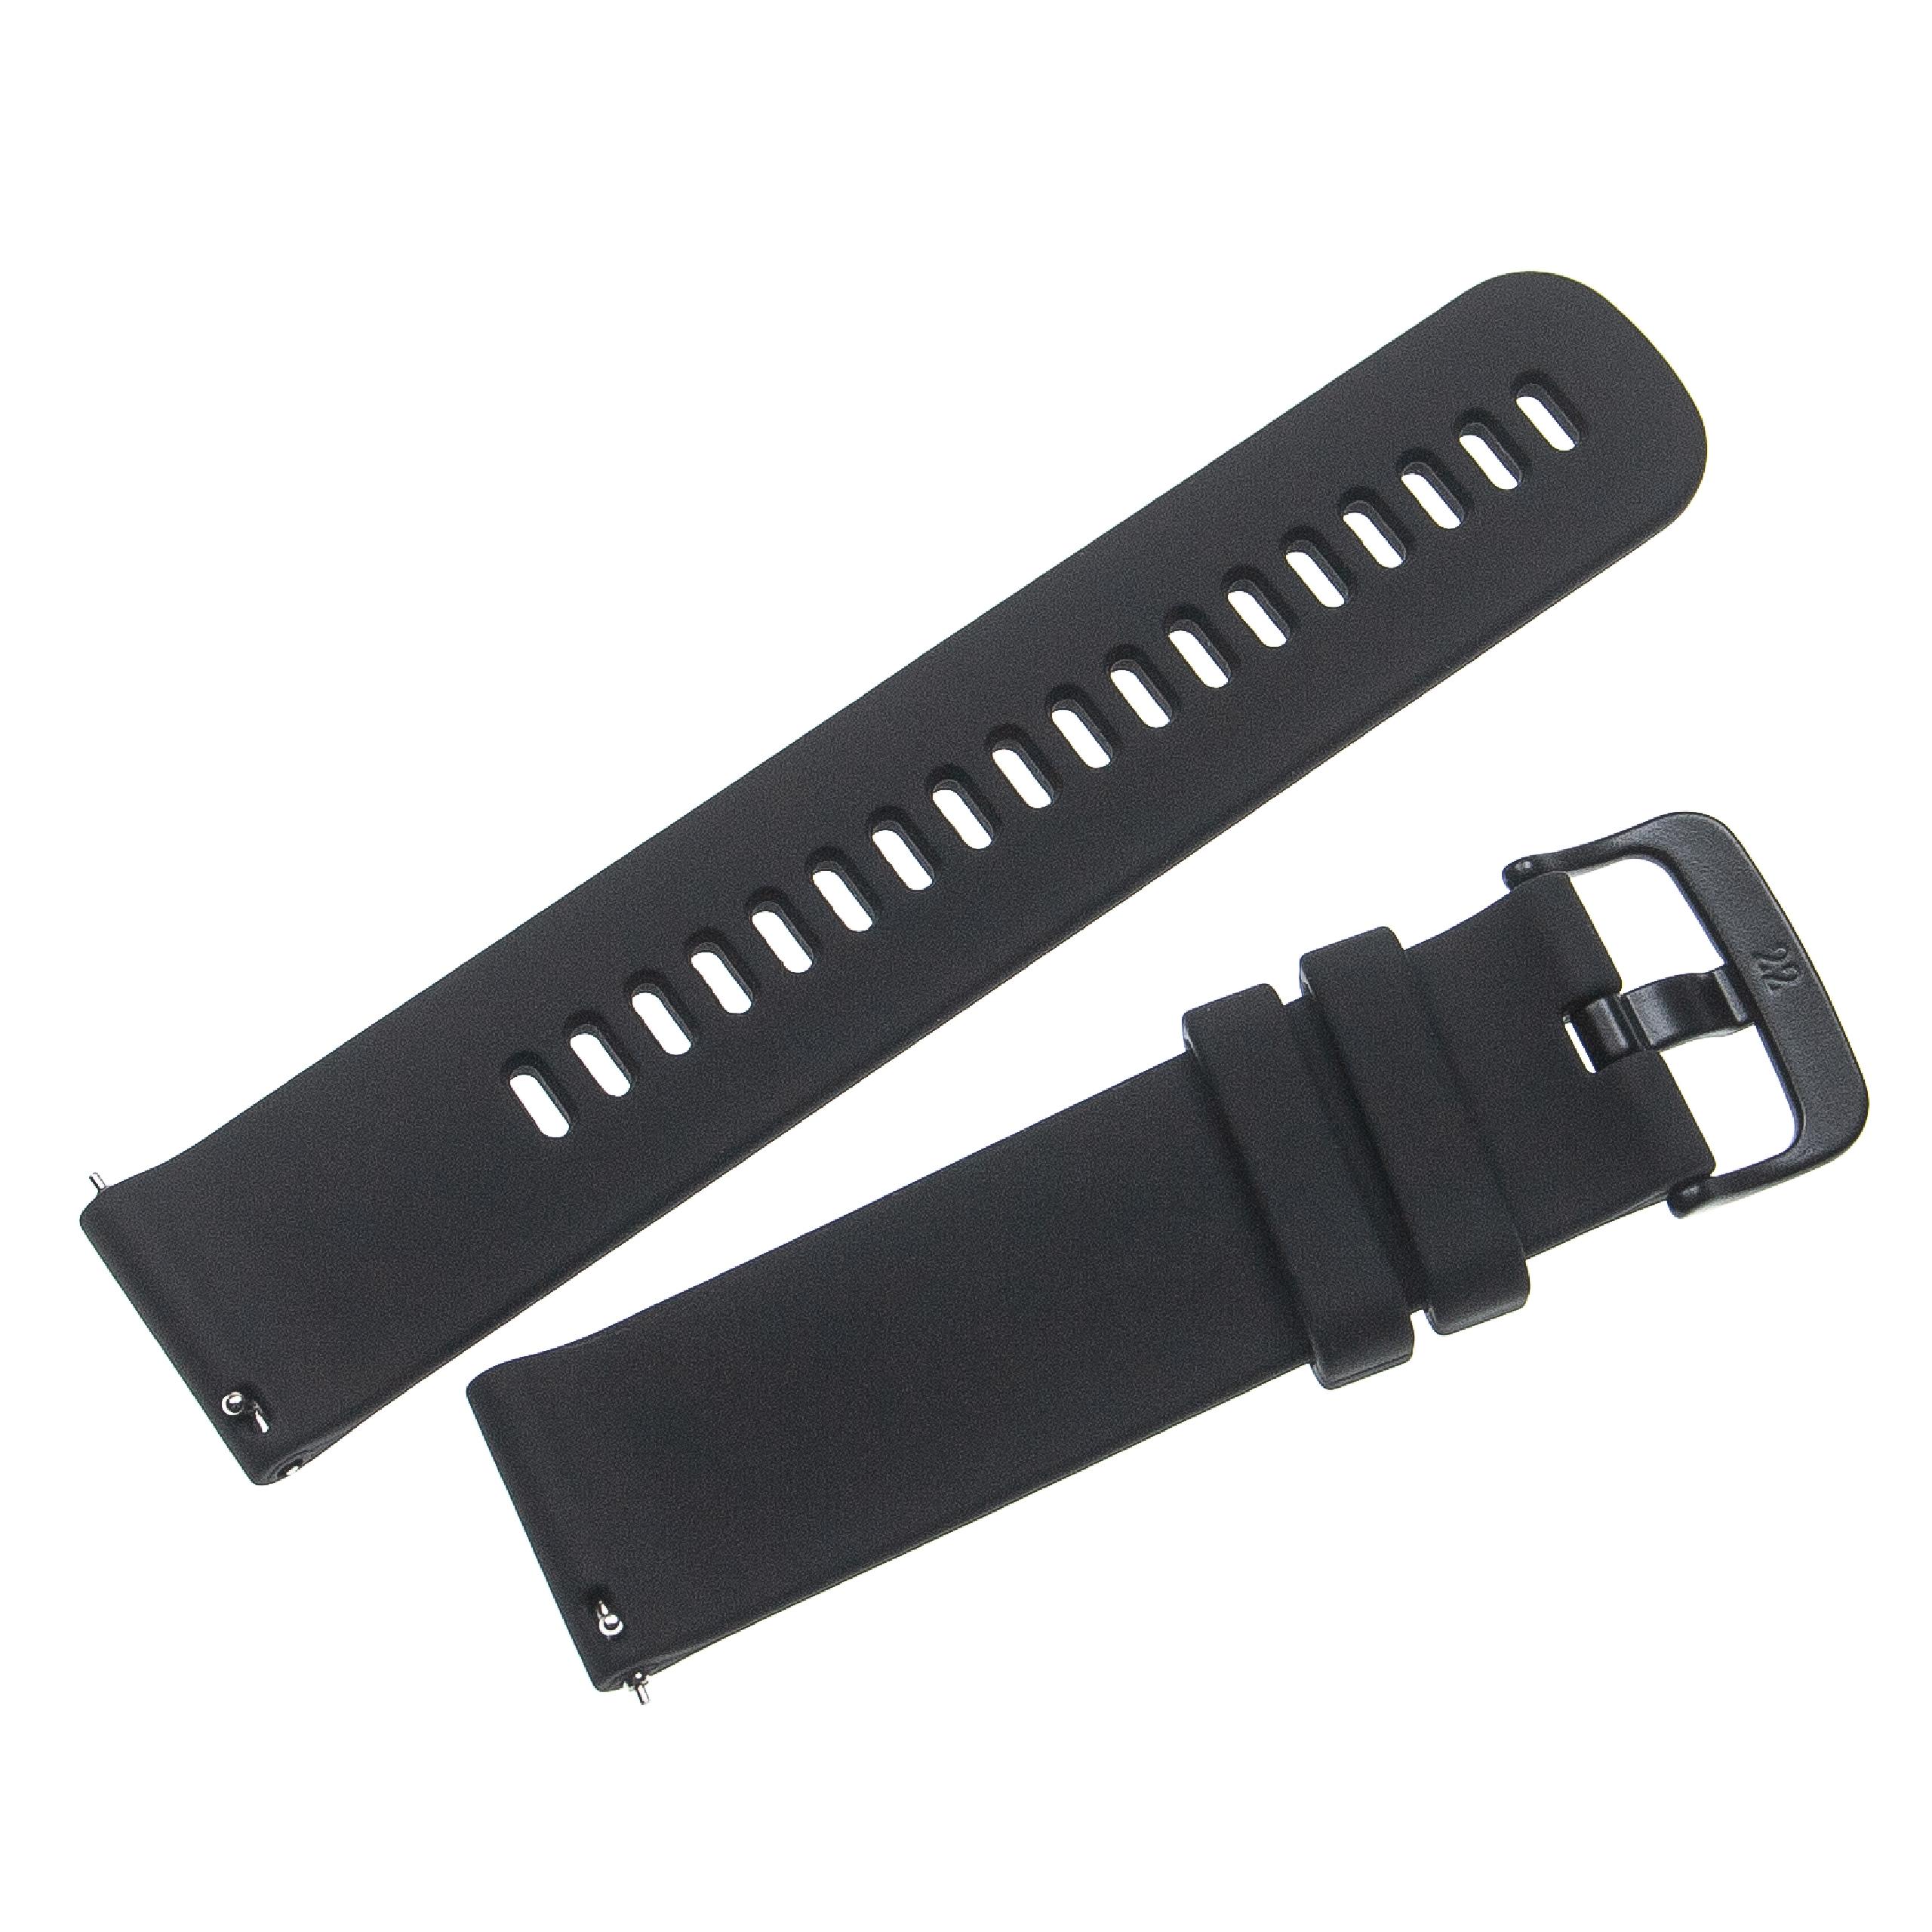 cinturino per Garmin Forerunner Smartwatch - 12,1 + 9,2 cm lunghezza, 22mm ampiezza, silicone, nero